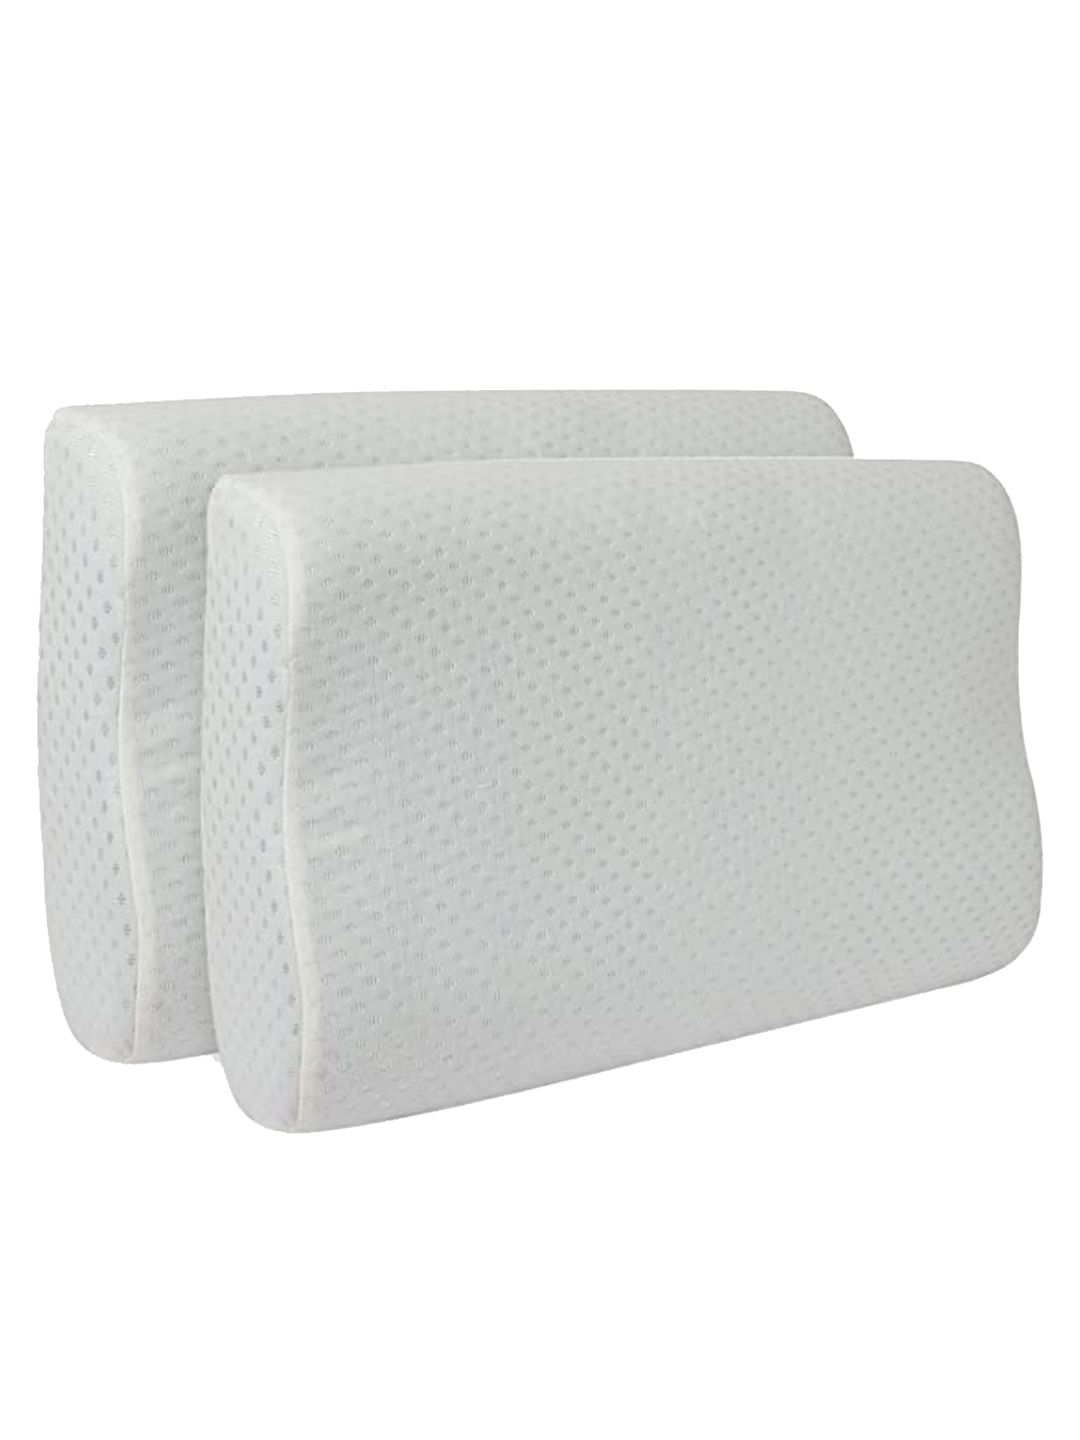 Sleepsia Set Of 2  White Solid Therapeutic Pillows Price in India